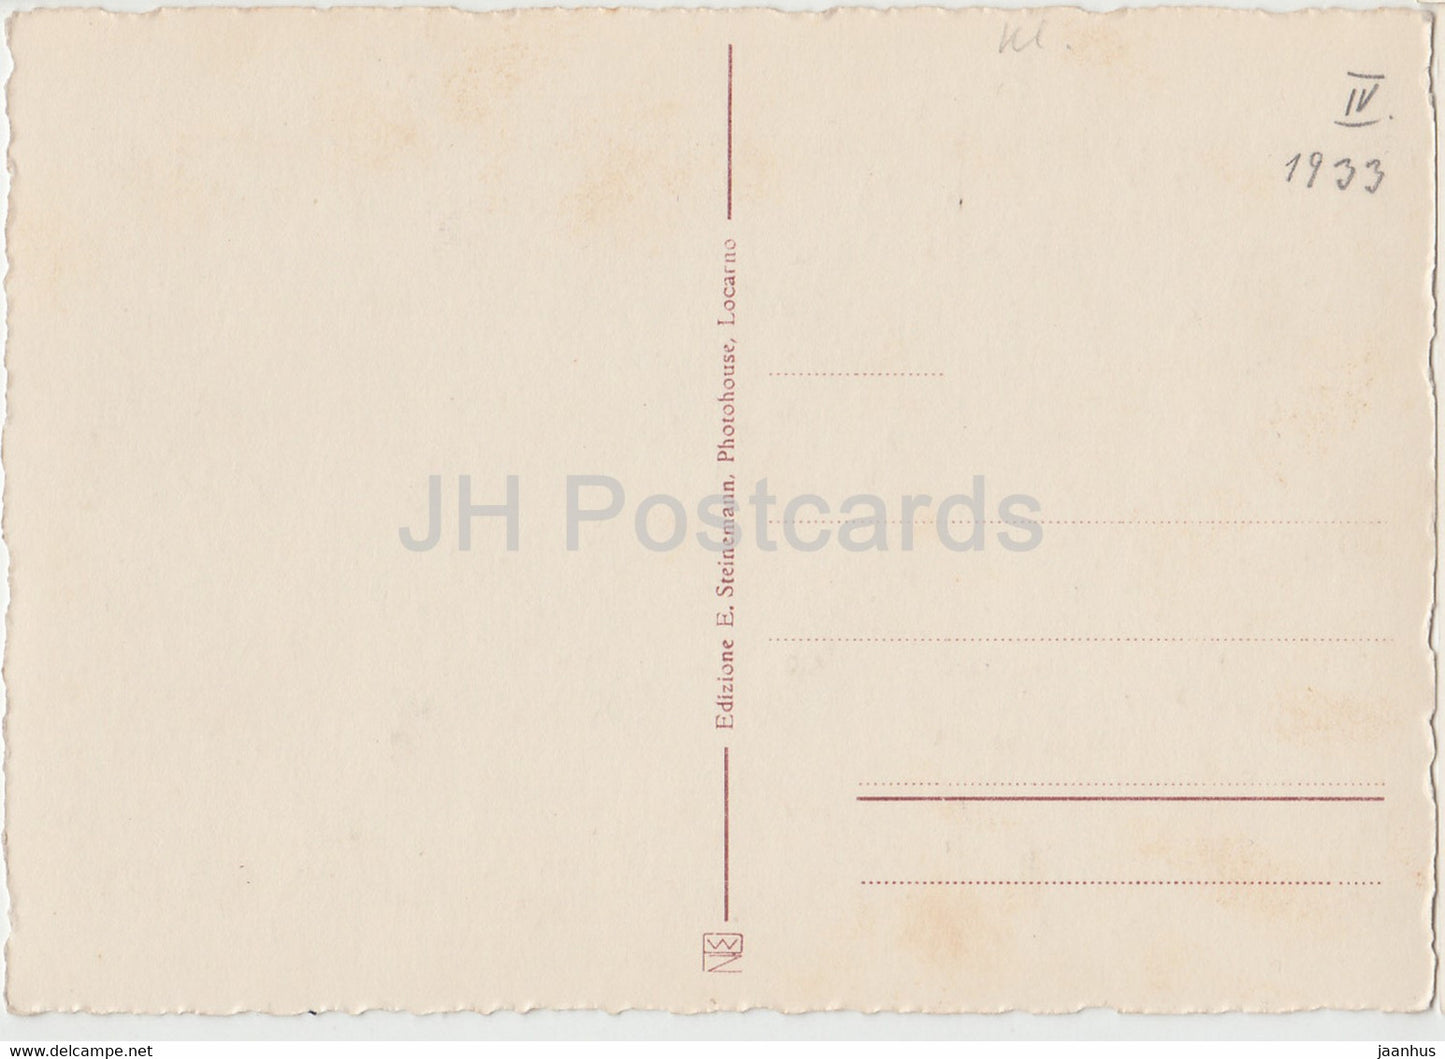 Locarno - Magnolie - 7159 - old postcard - 1933 - Switzerland - unused